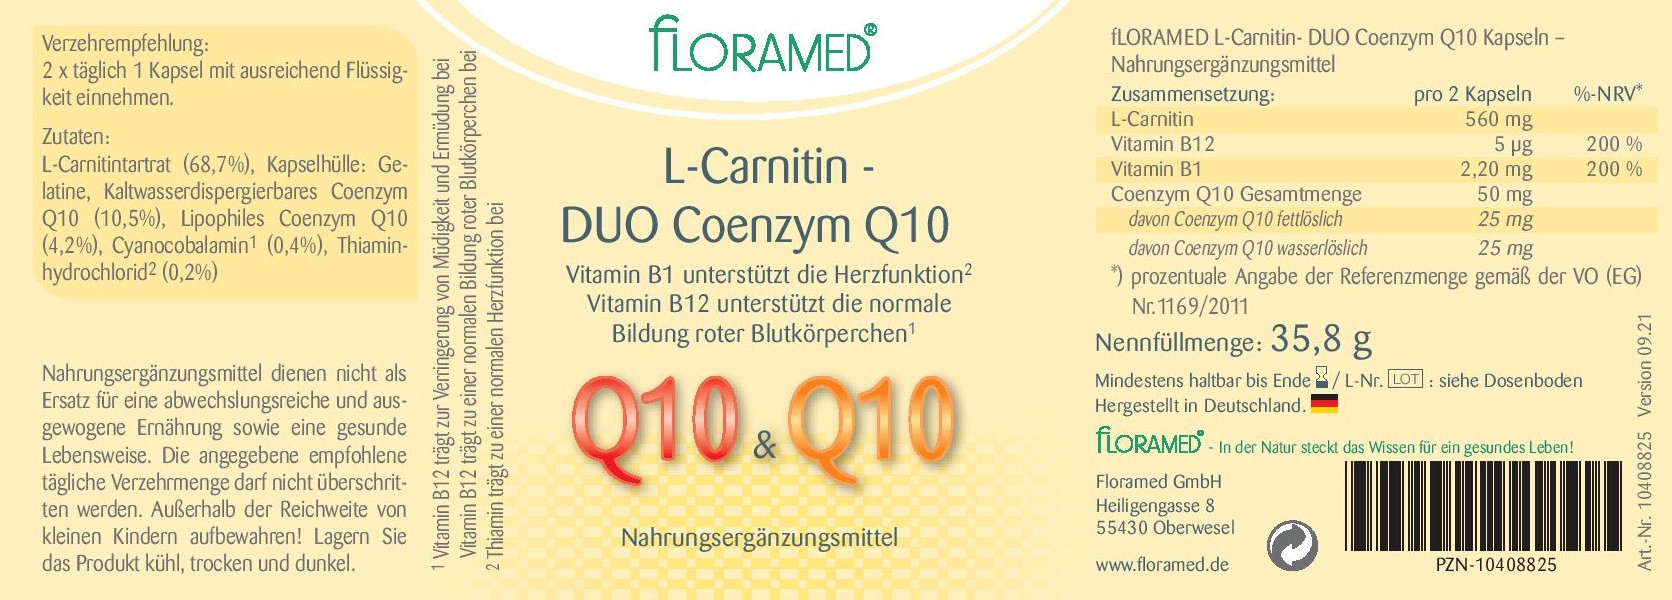 Floramed L-Carnitin - DUO Coenzym Q10